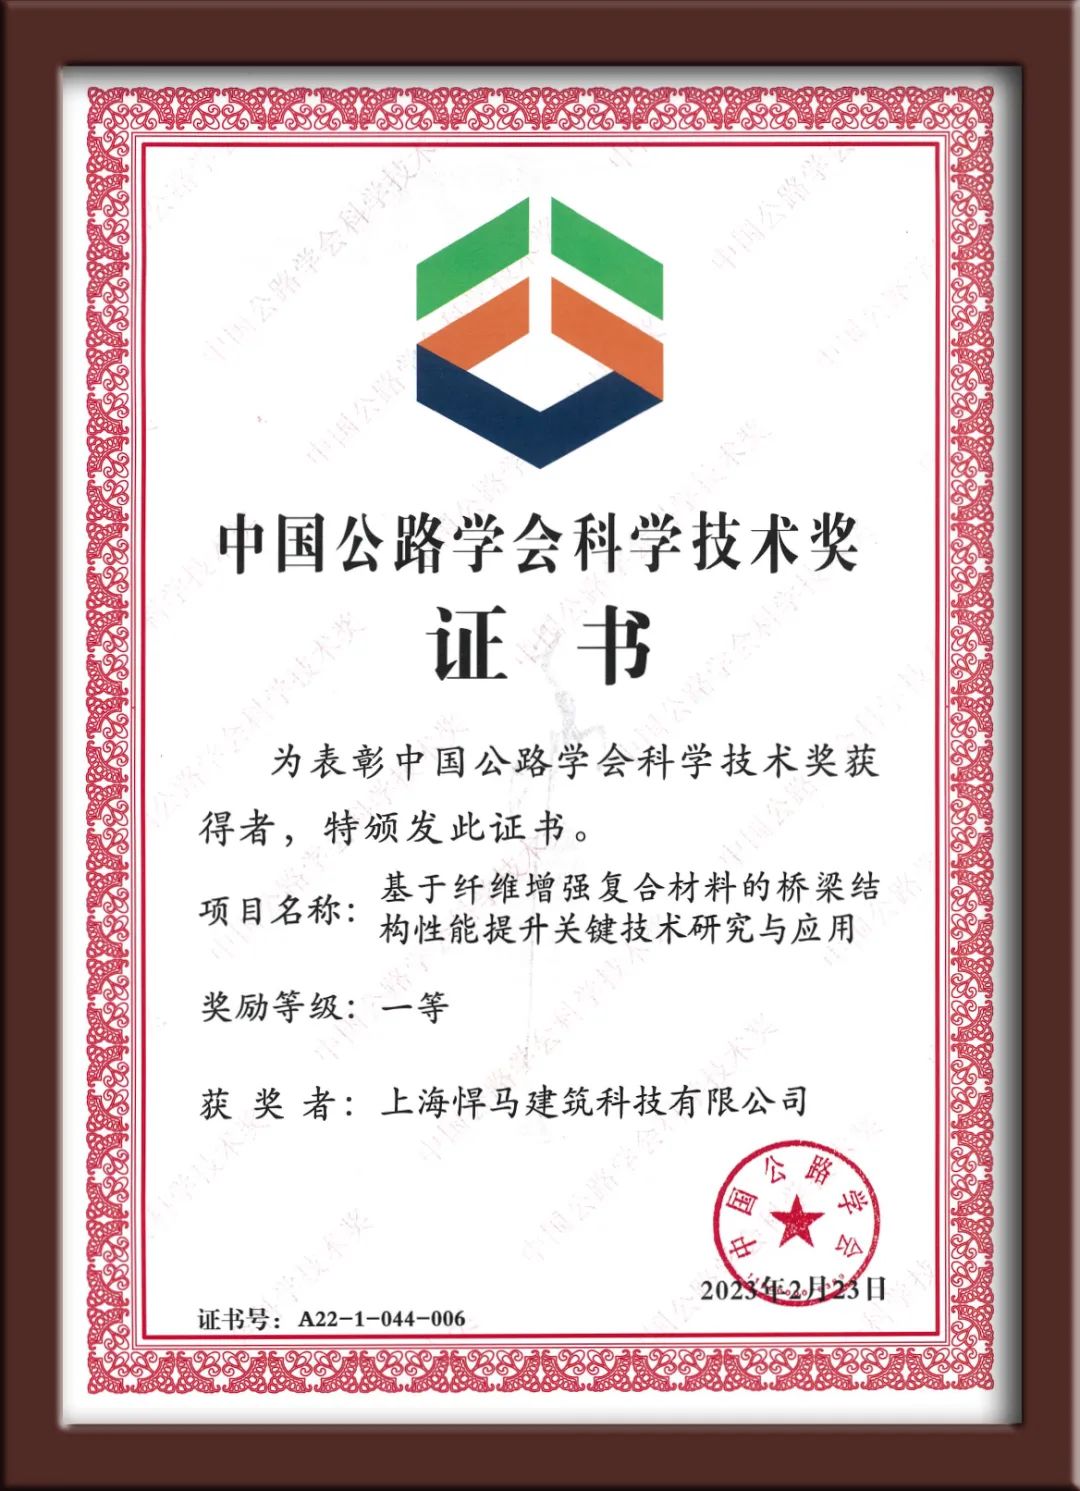 【喜报】<font color="red">悍马</font>荣获中国公路学会科学技术一等奖